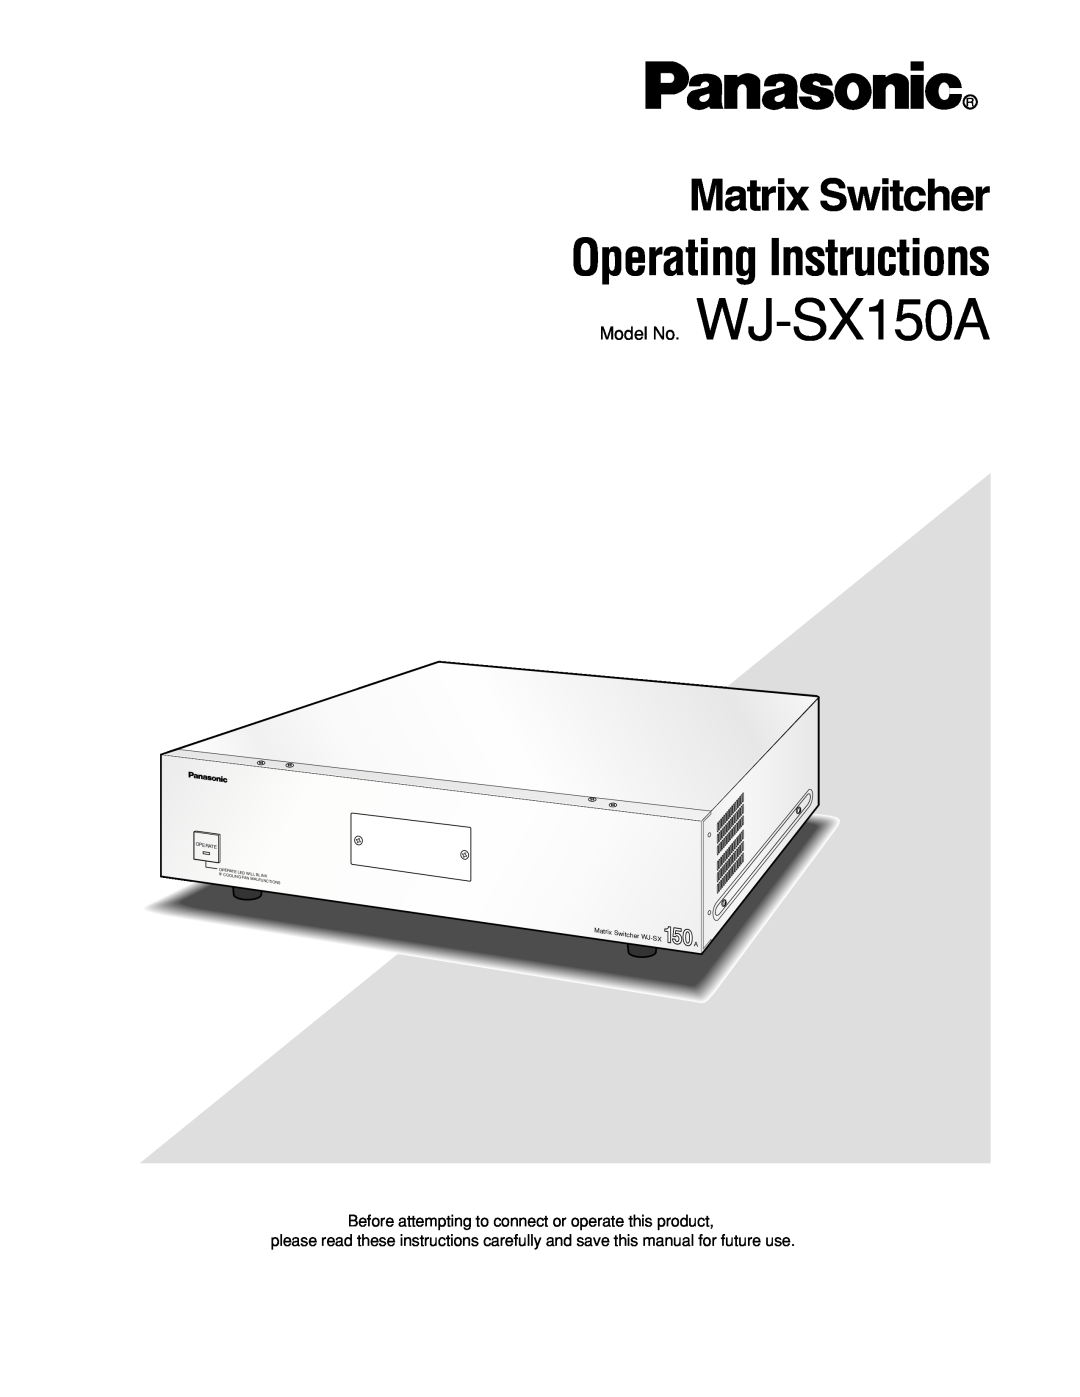 Panasonic manual Operating Instructions, Matrix Switcher, Model No. WJ-SX150A, Led Will, Malfunctions 